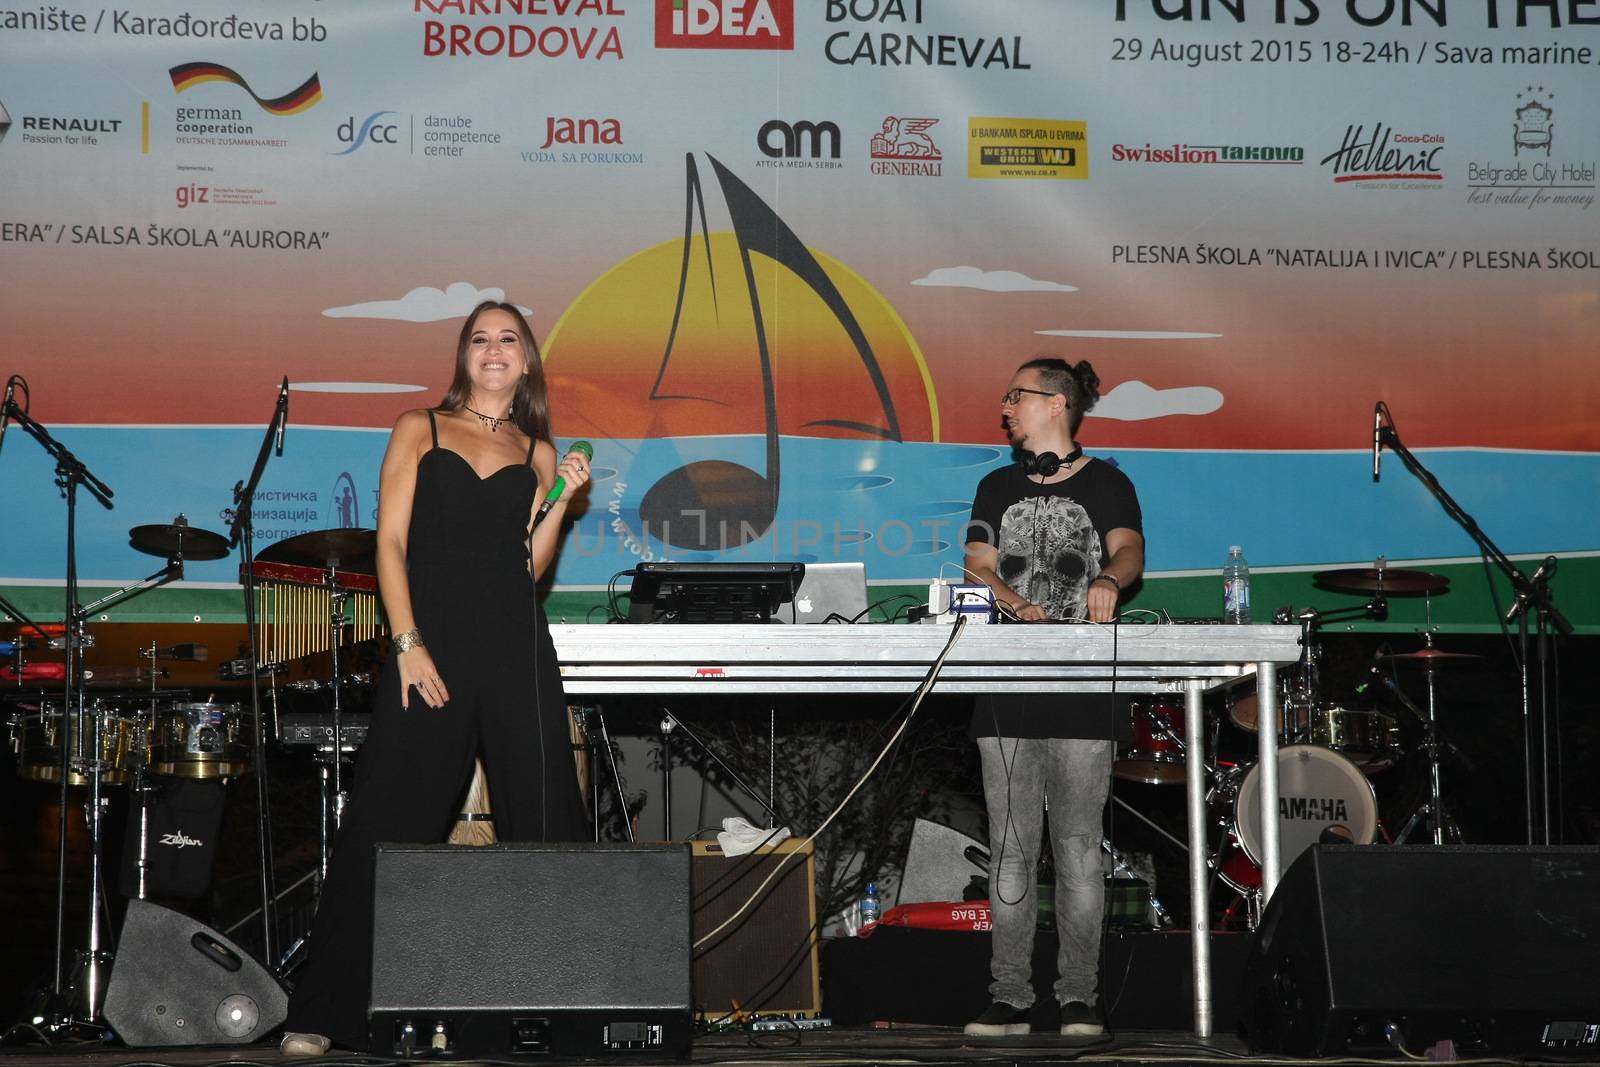 Sevdah Baby band  concert at Belgrade Boat Carnival held on Avgust 29 2015 at Belgrade,Serbia